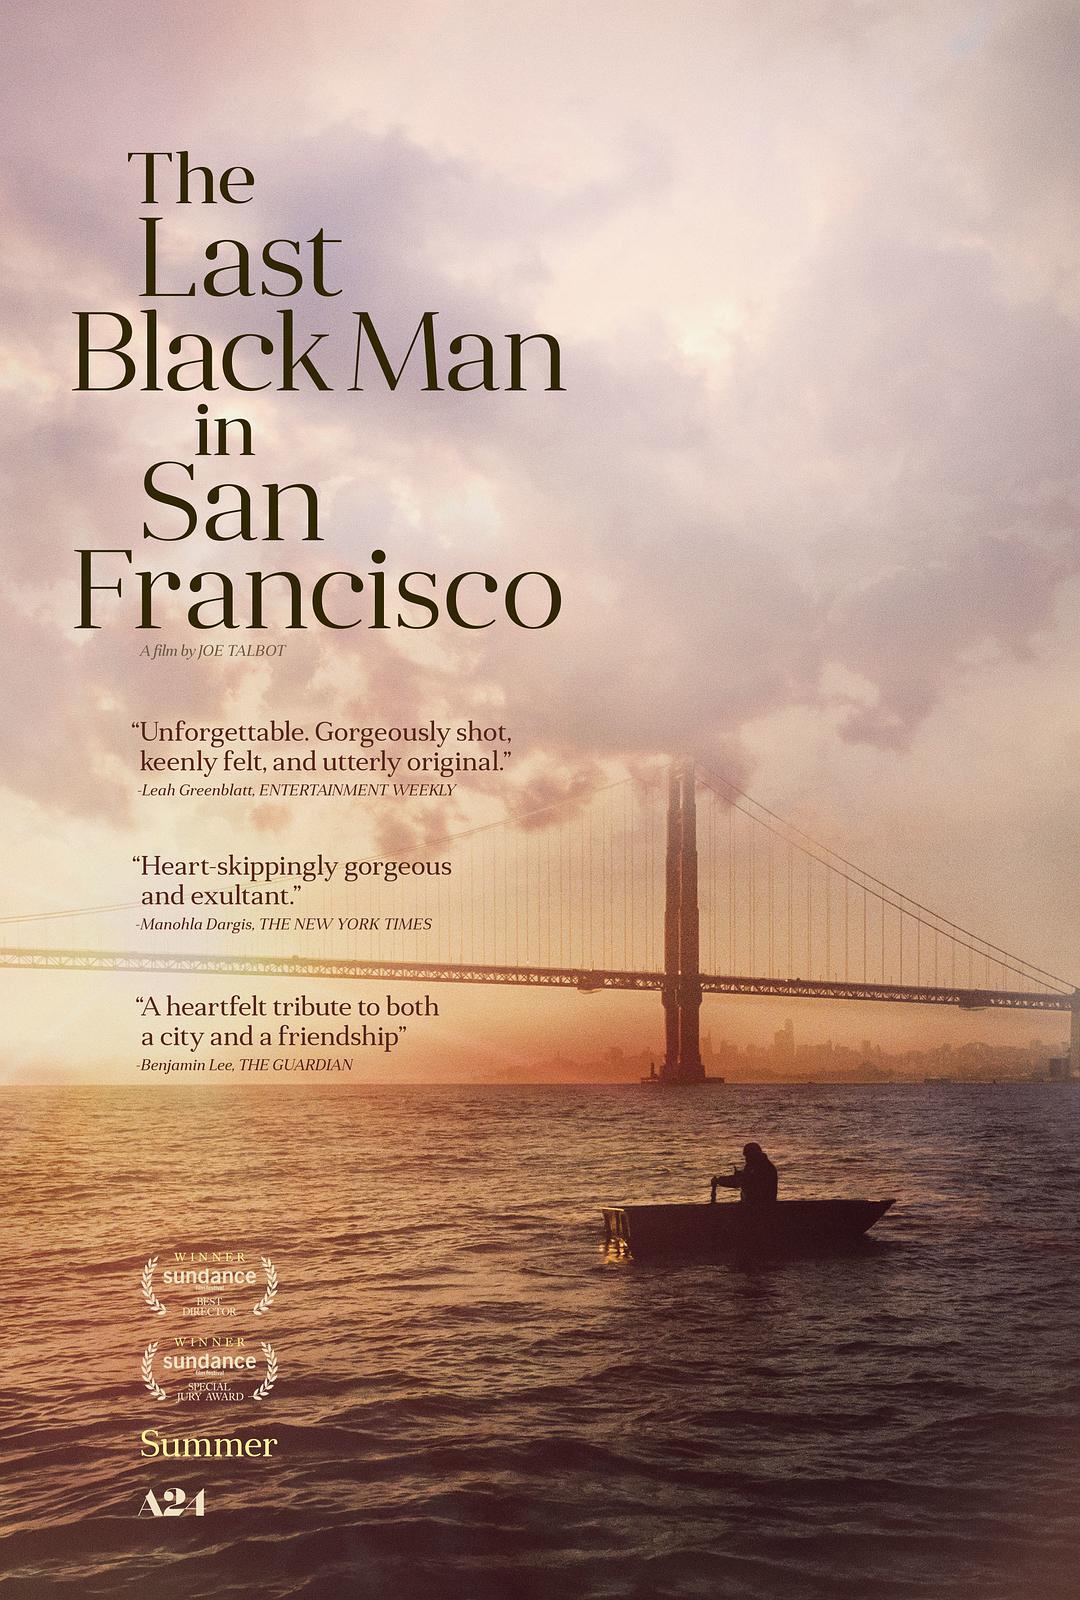 旧金山的最初一个黑人 The.Last.Black.Man.in.San.Francisco.2019.LiMiTED.720p.BluRay.x264-CADAVER 5.46GB-1.png